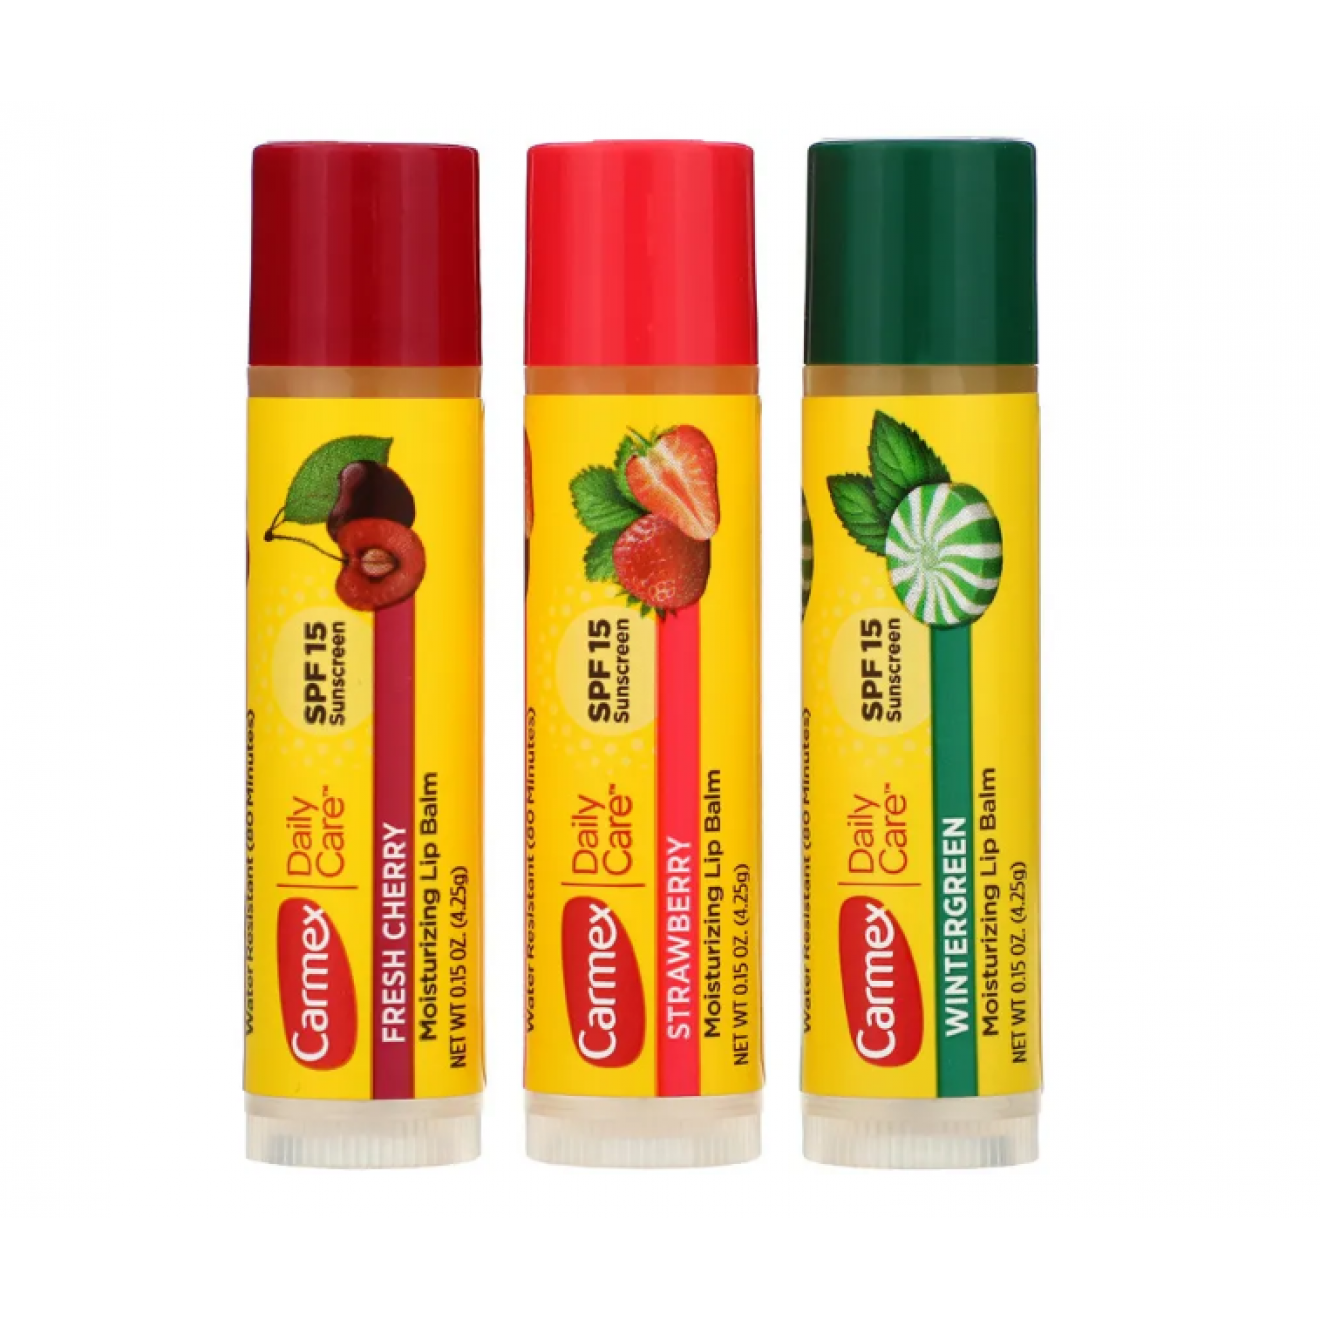 Разнообразие бальзамов для губ для ежедневного ухода, Carmex, Daily Care Lip Balm Variety 0.15 oz Pack of 3 (Stick in Blister Pack)